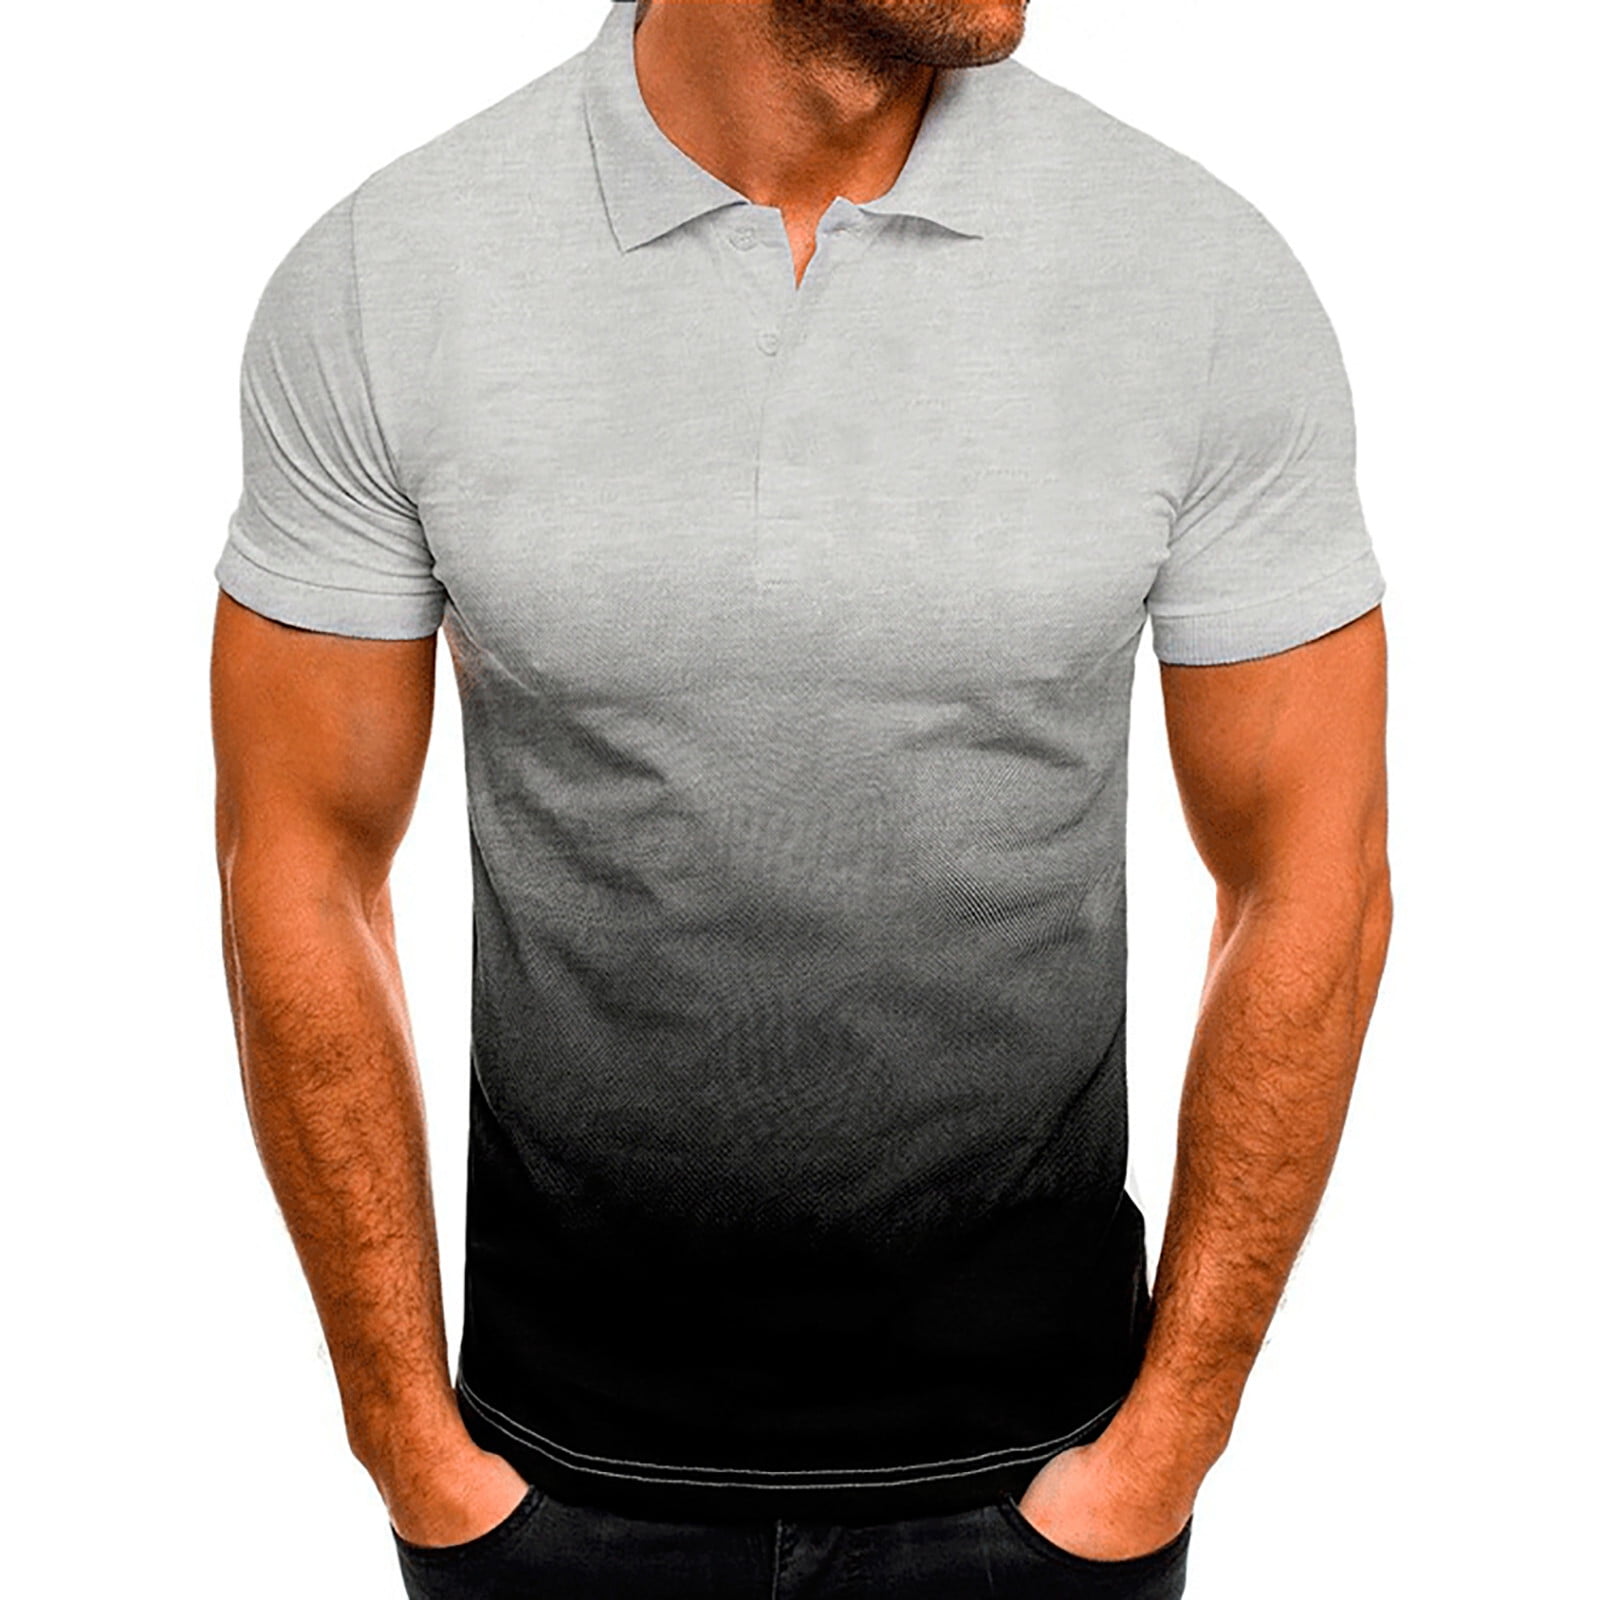 absuyy Mens Polos Shirts Tank Tops Print Collared Neck Casual Short Sleeve  Summer Tees #39 Gray